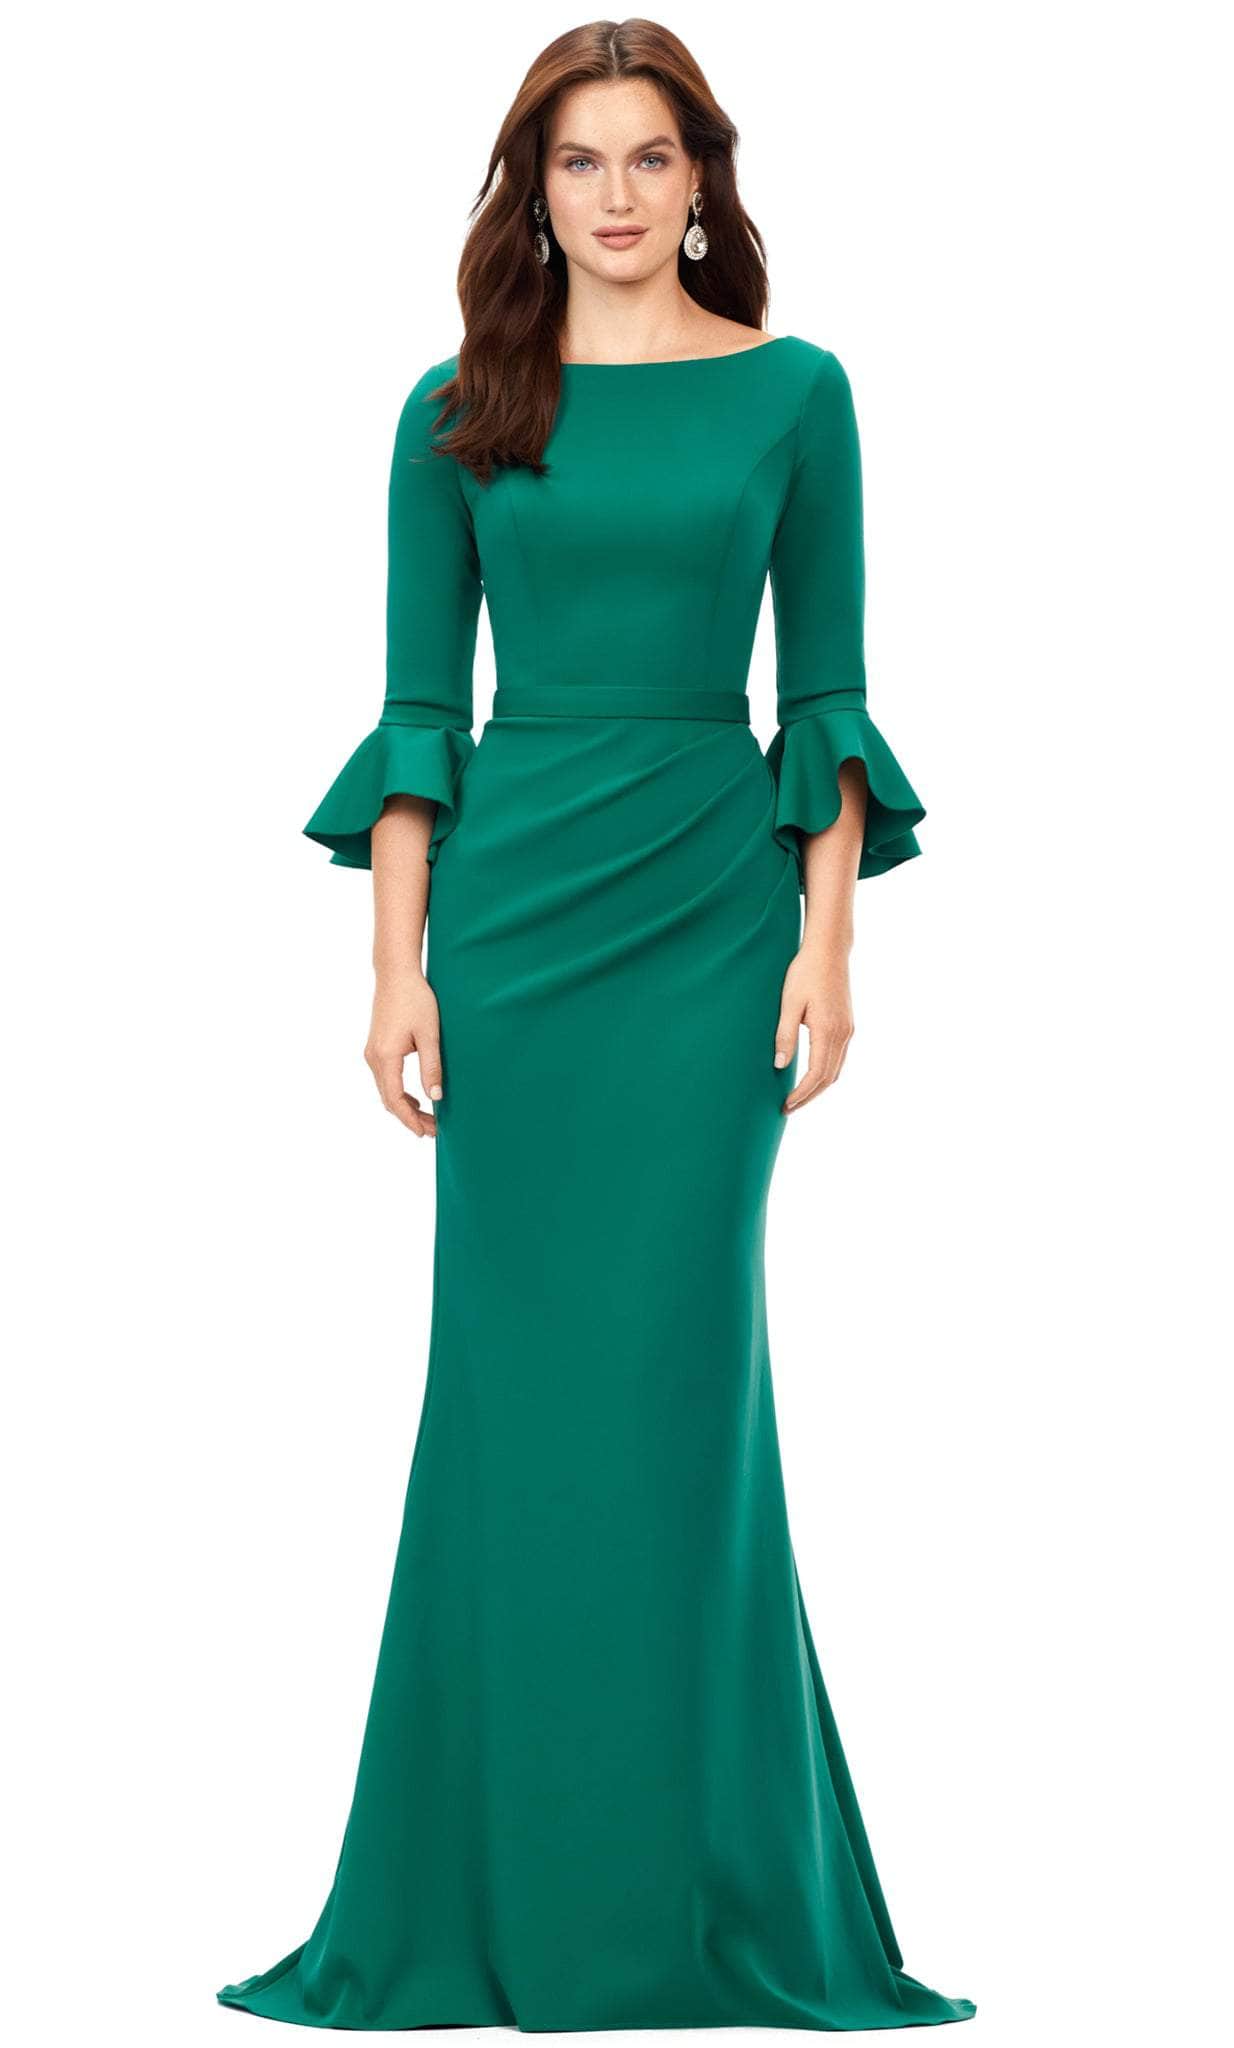 Ashley Lauren 11325 - Flutter Sleeves Bateau Neck Evening Dress Special Occasion Dress 0 / Dark Emerald